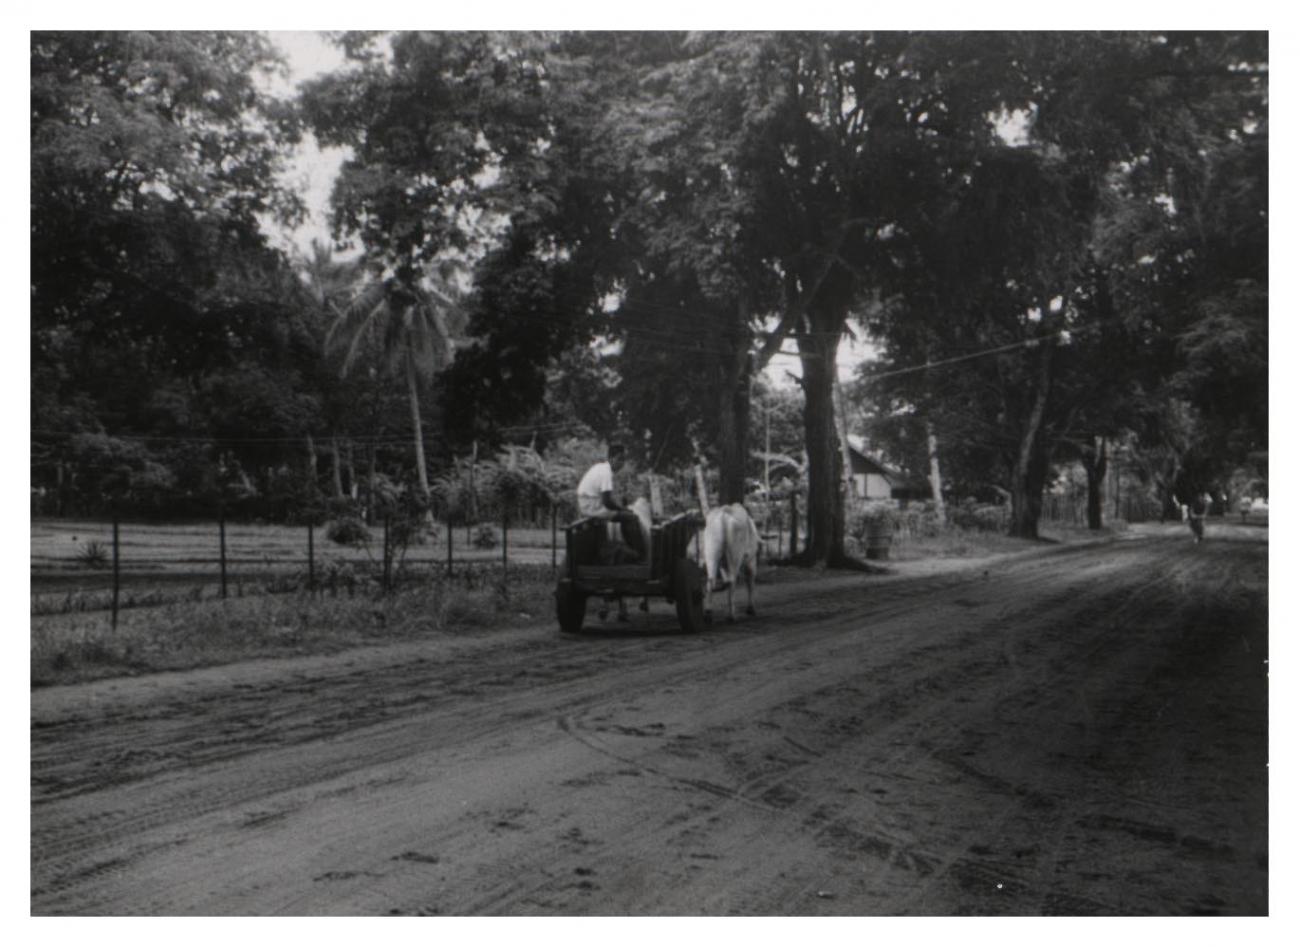 BD/54/41 - 
Merauke, unpaved road with cart
